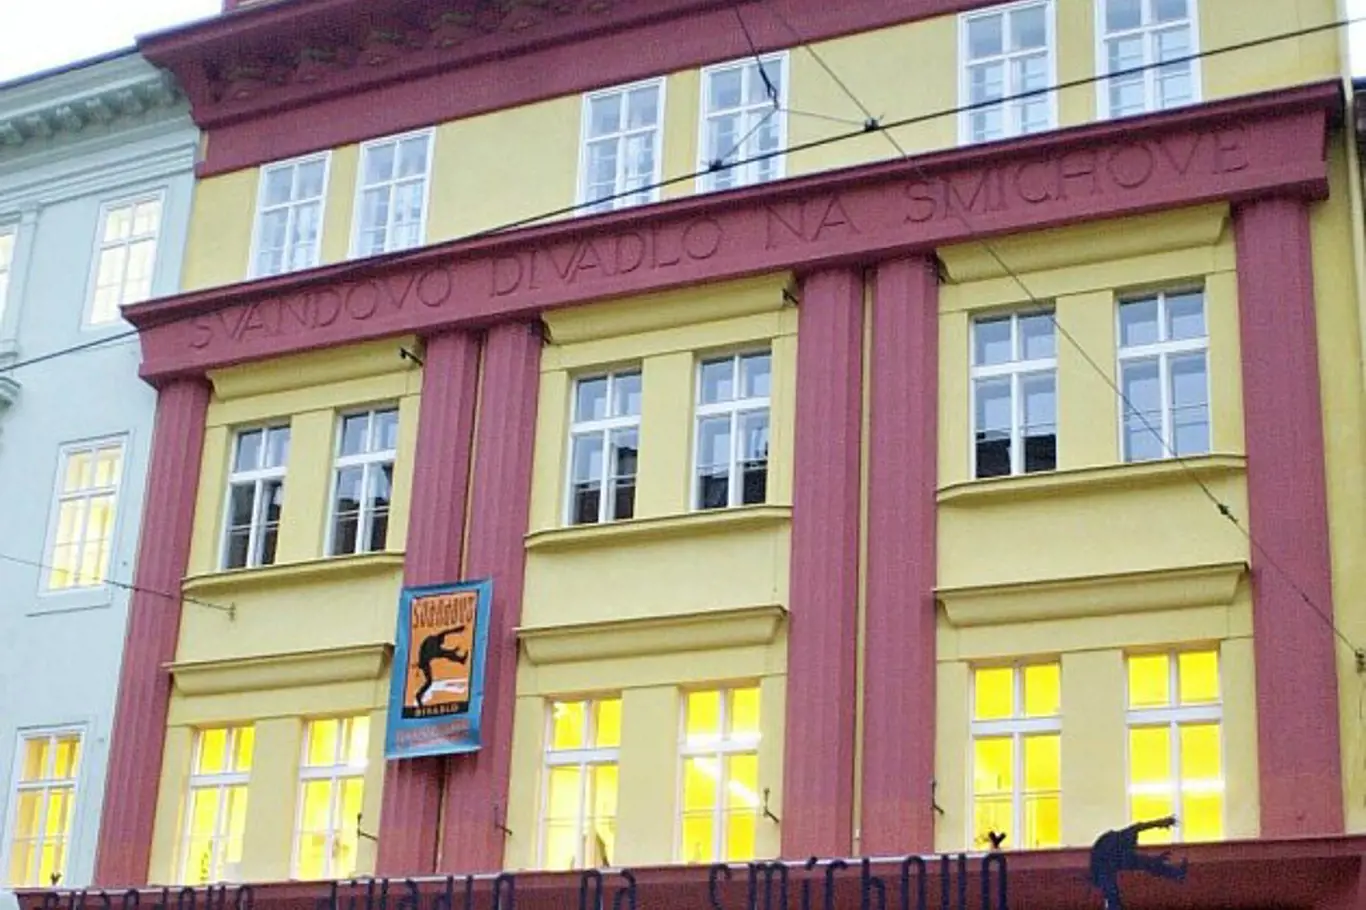 Švandovo divadlo oslavilo 1. října 135. výročí.